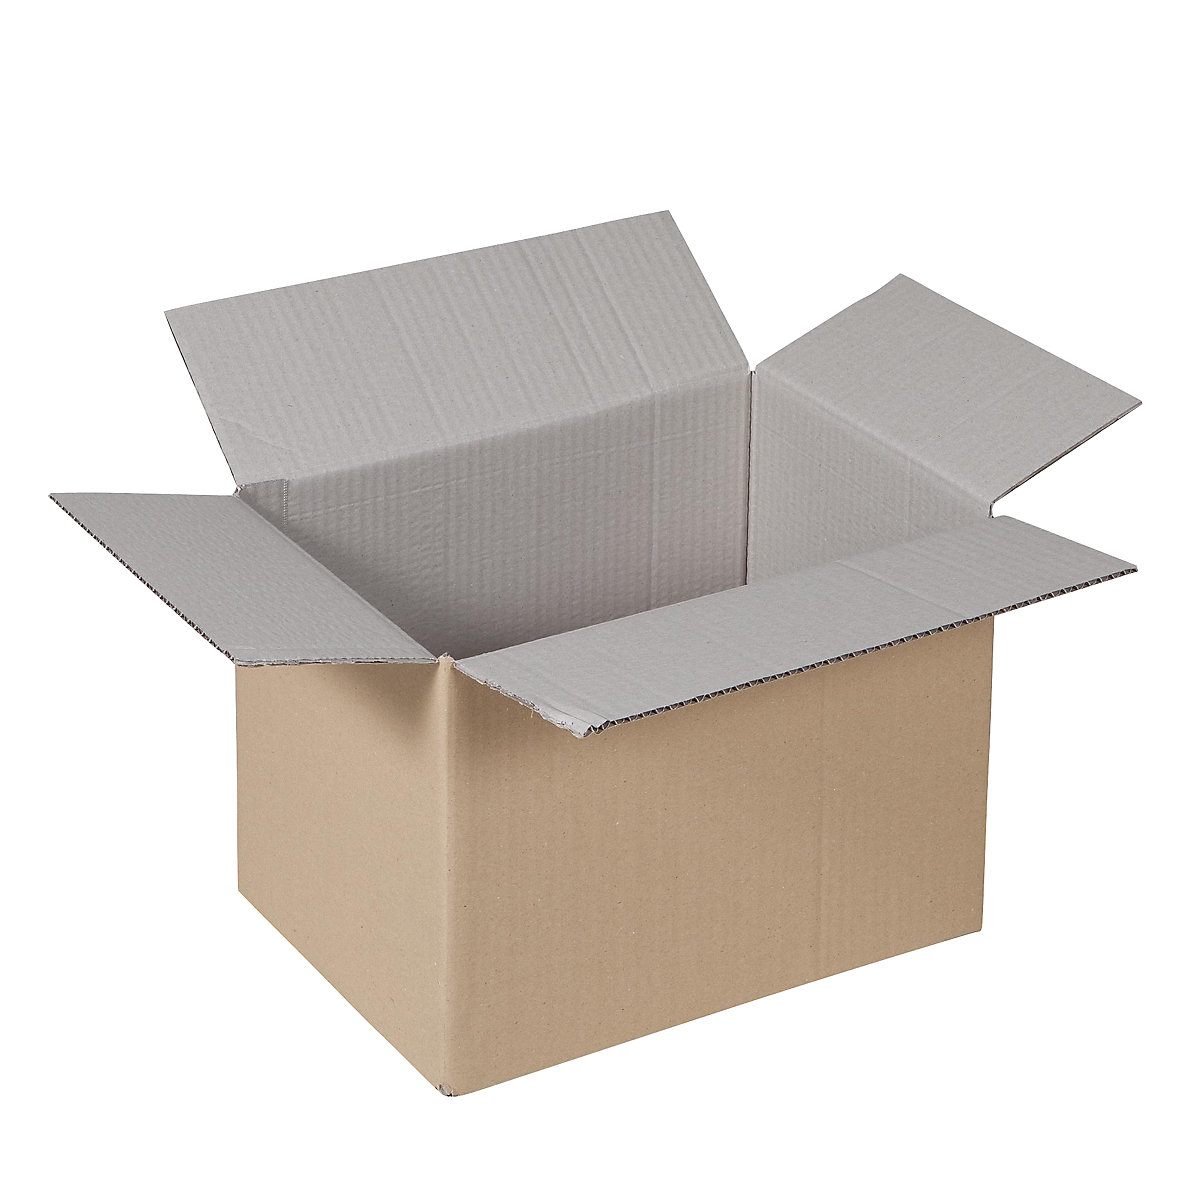 Folding cardboard box, FEFCO 0201, made of single fluted cardboard, internal dimensions 350 x 230 x 240 mm, pack of 100-30